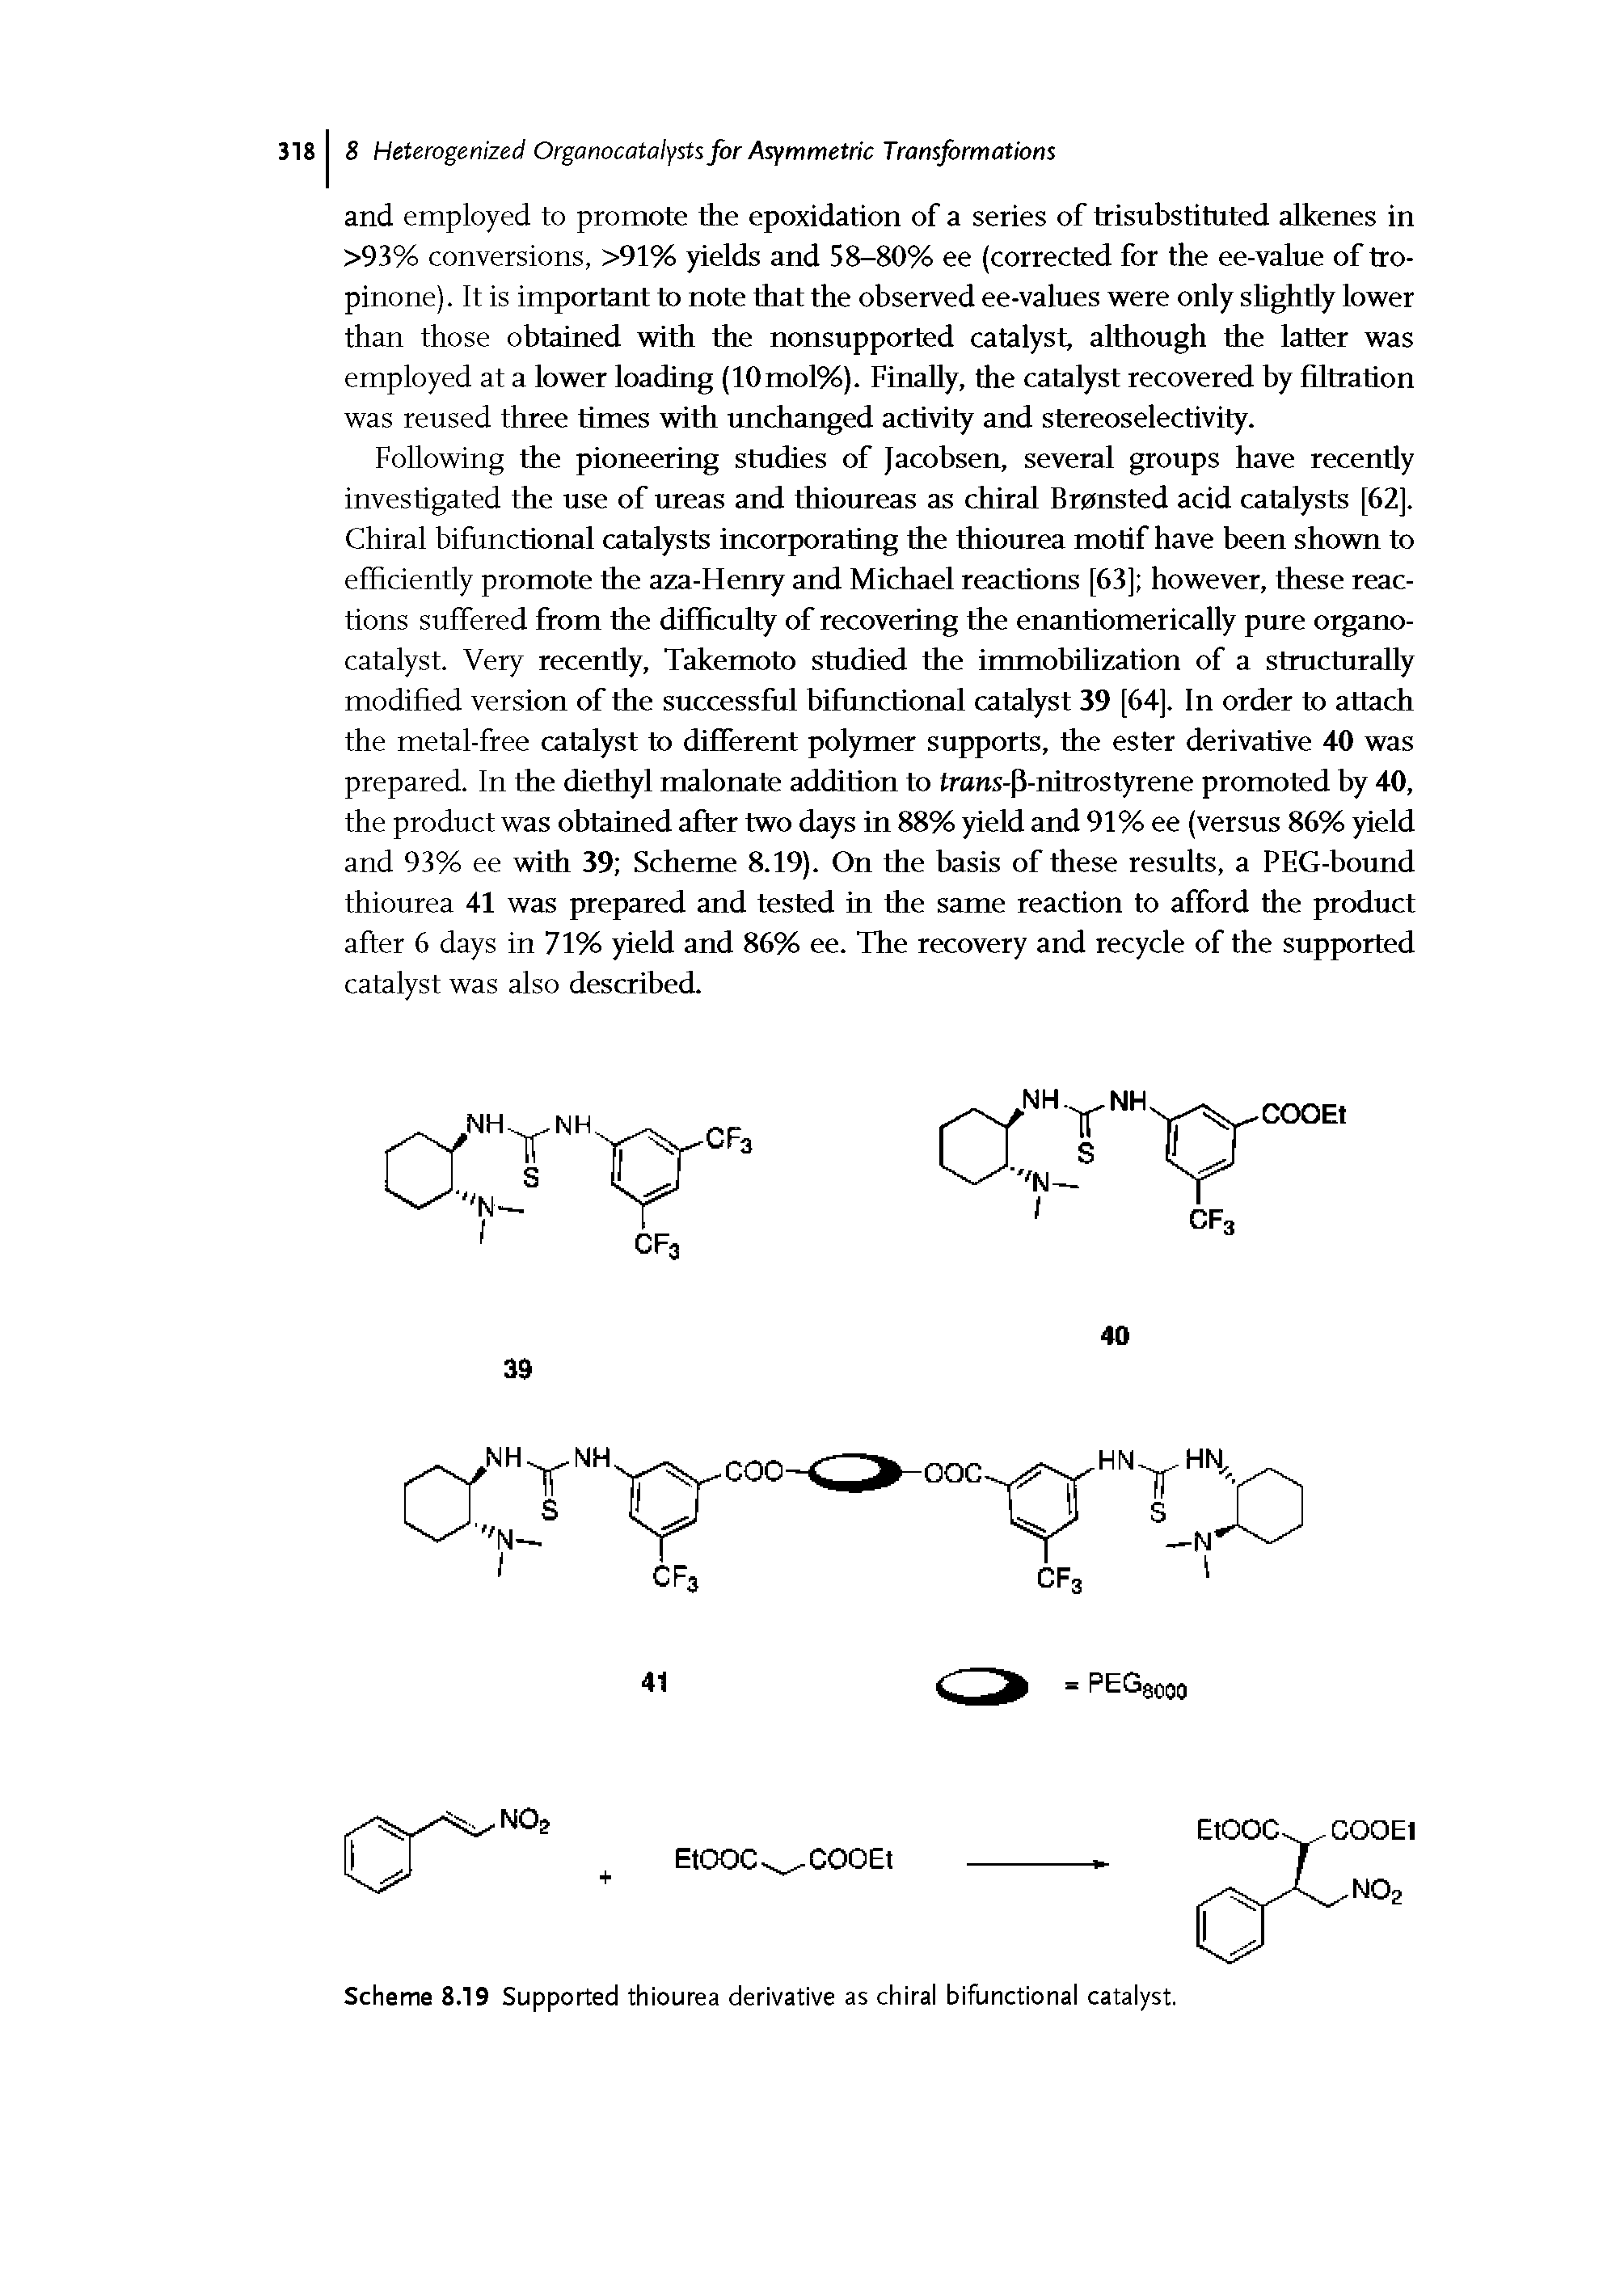 Scheme 8.19 Supported thiourea derivative as chiral bifunctional catalyst.